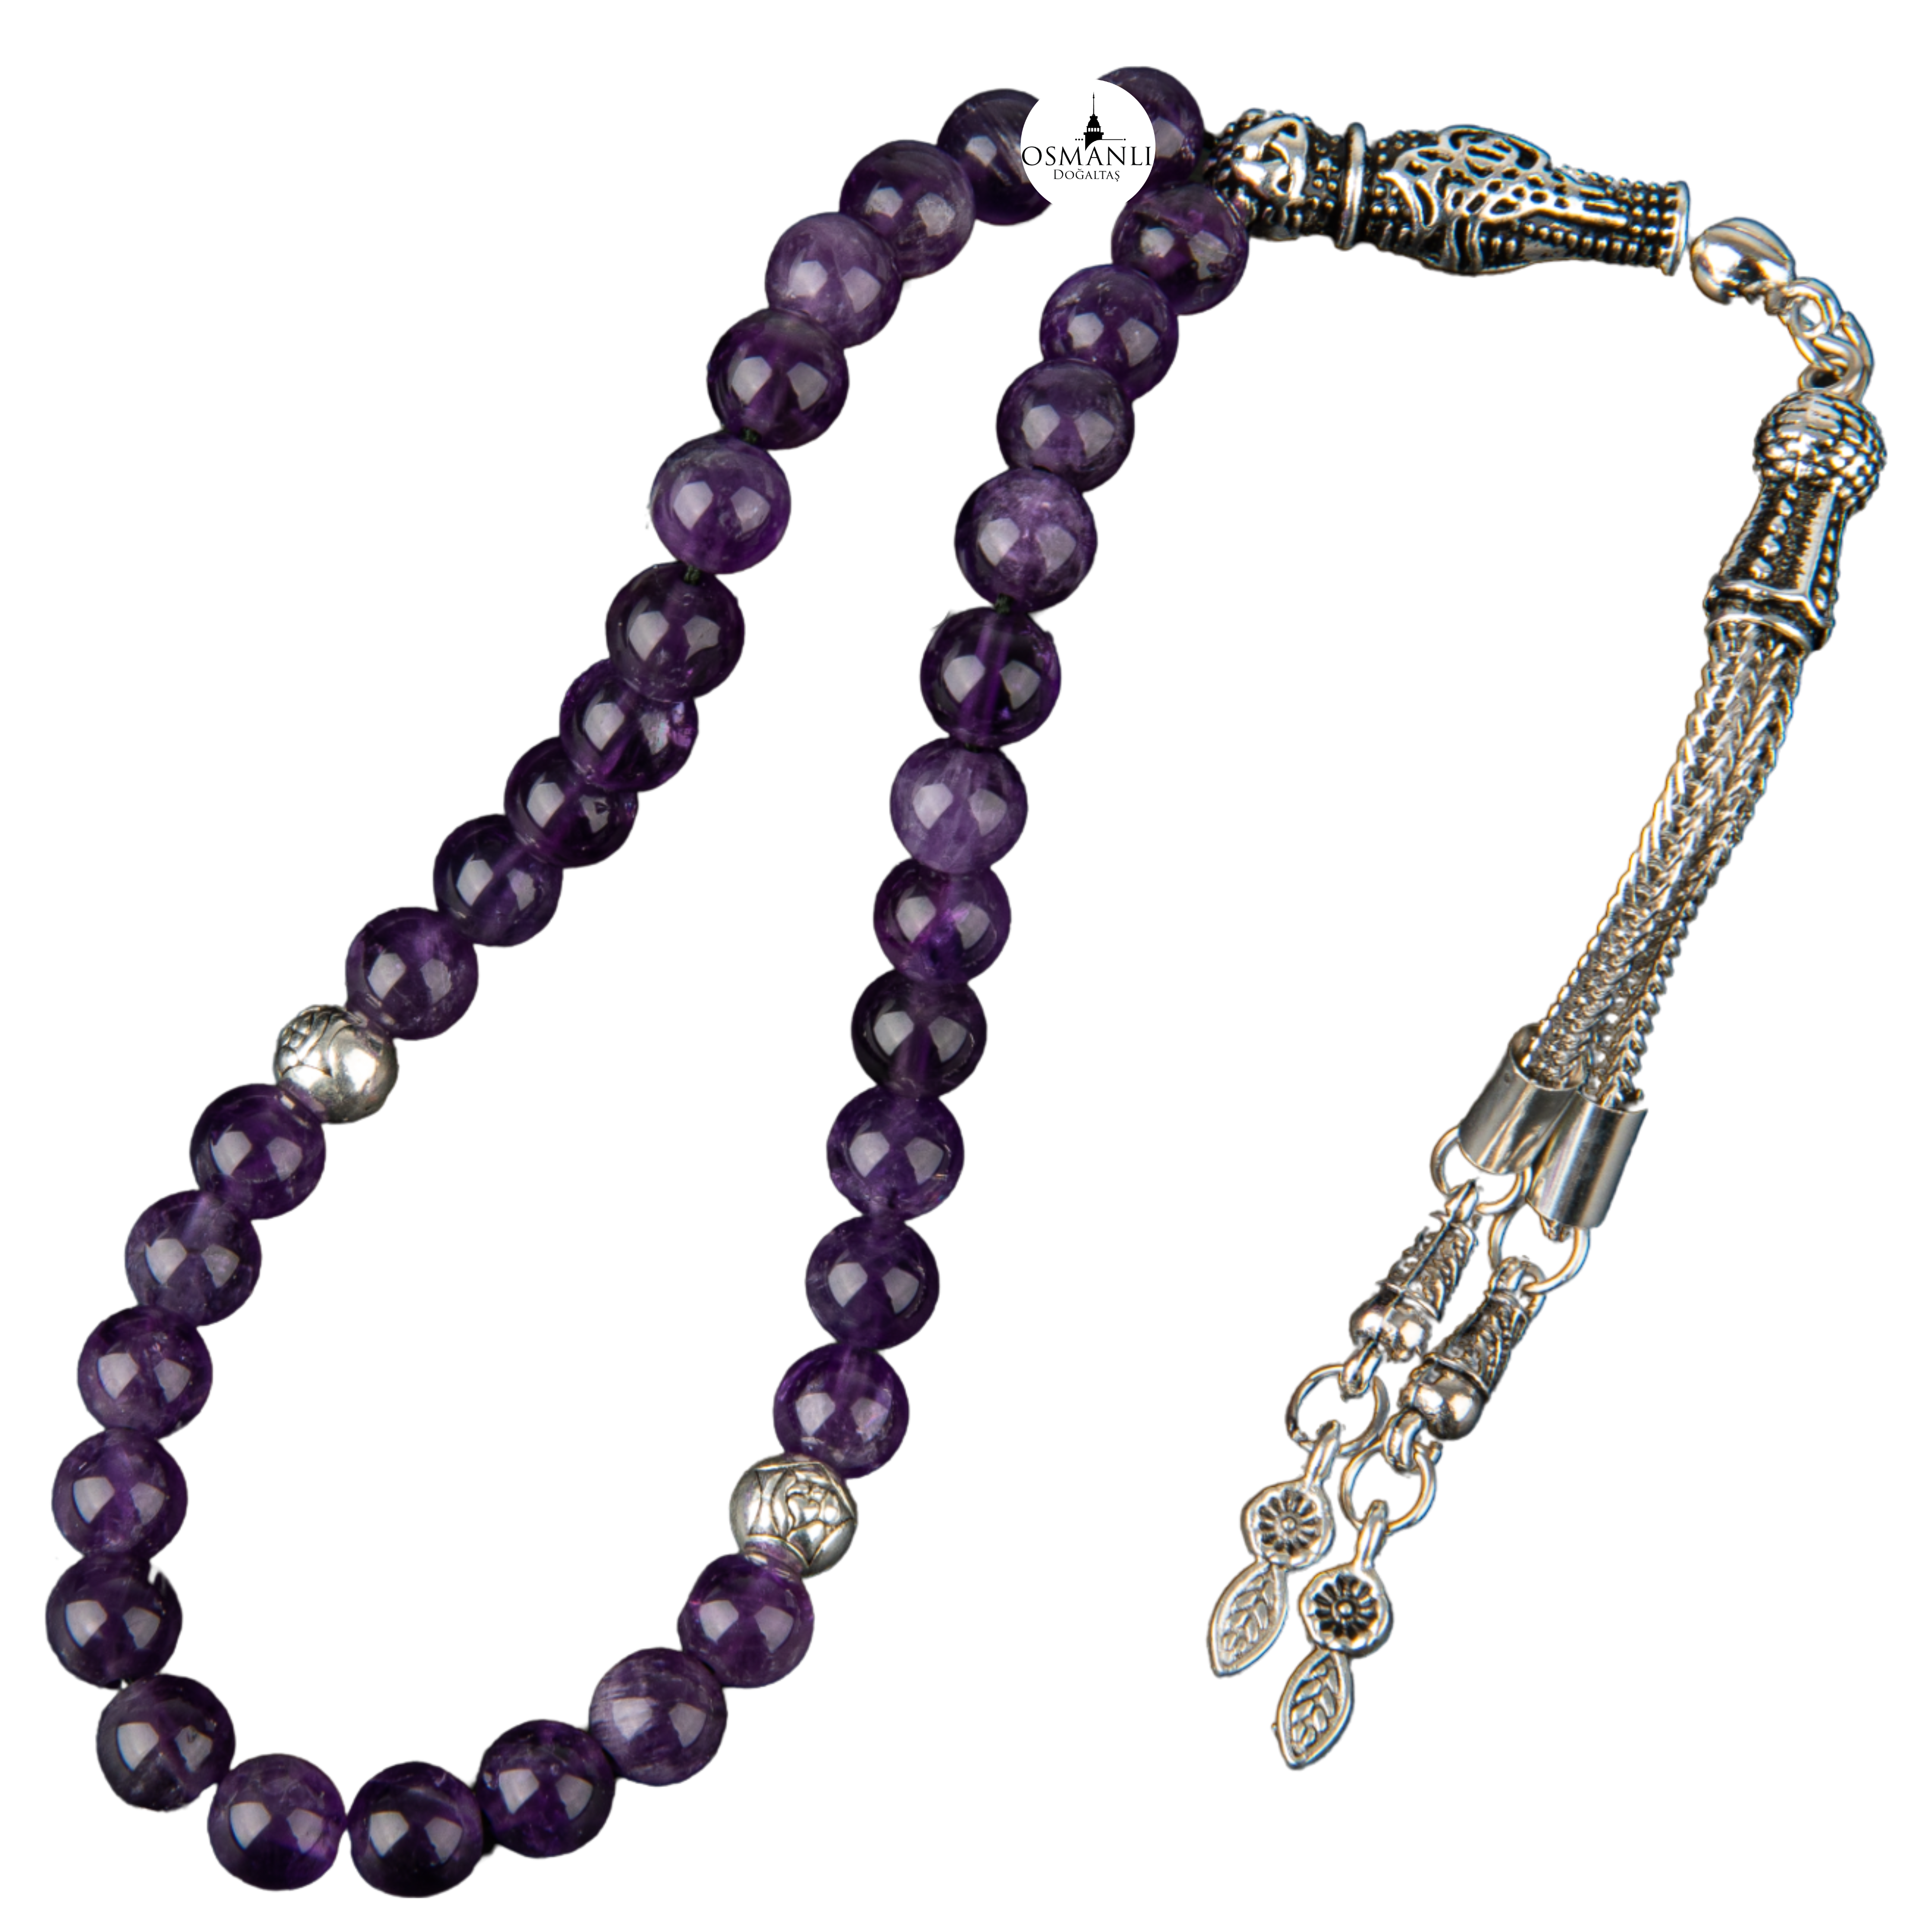 Amethyst Natural Stone Prayer Beads 33 - 6mm